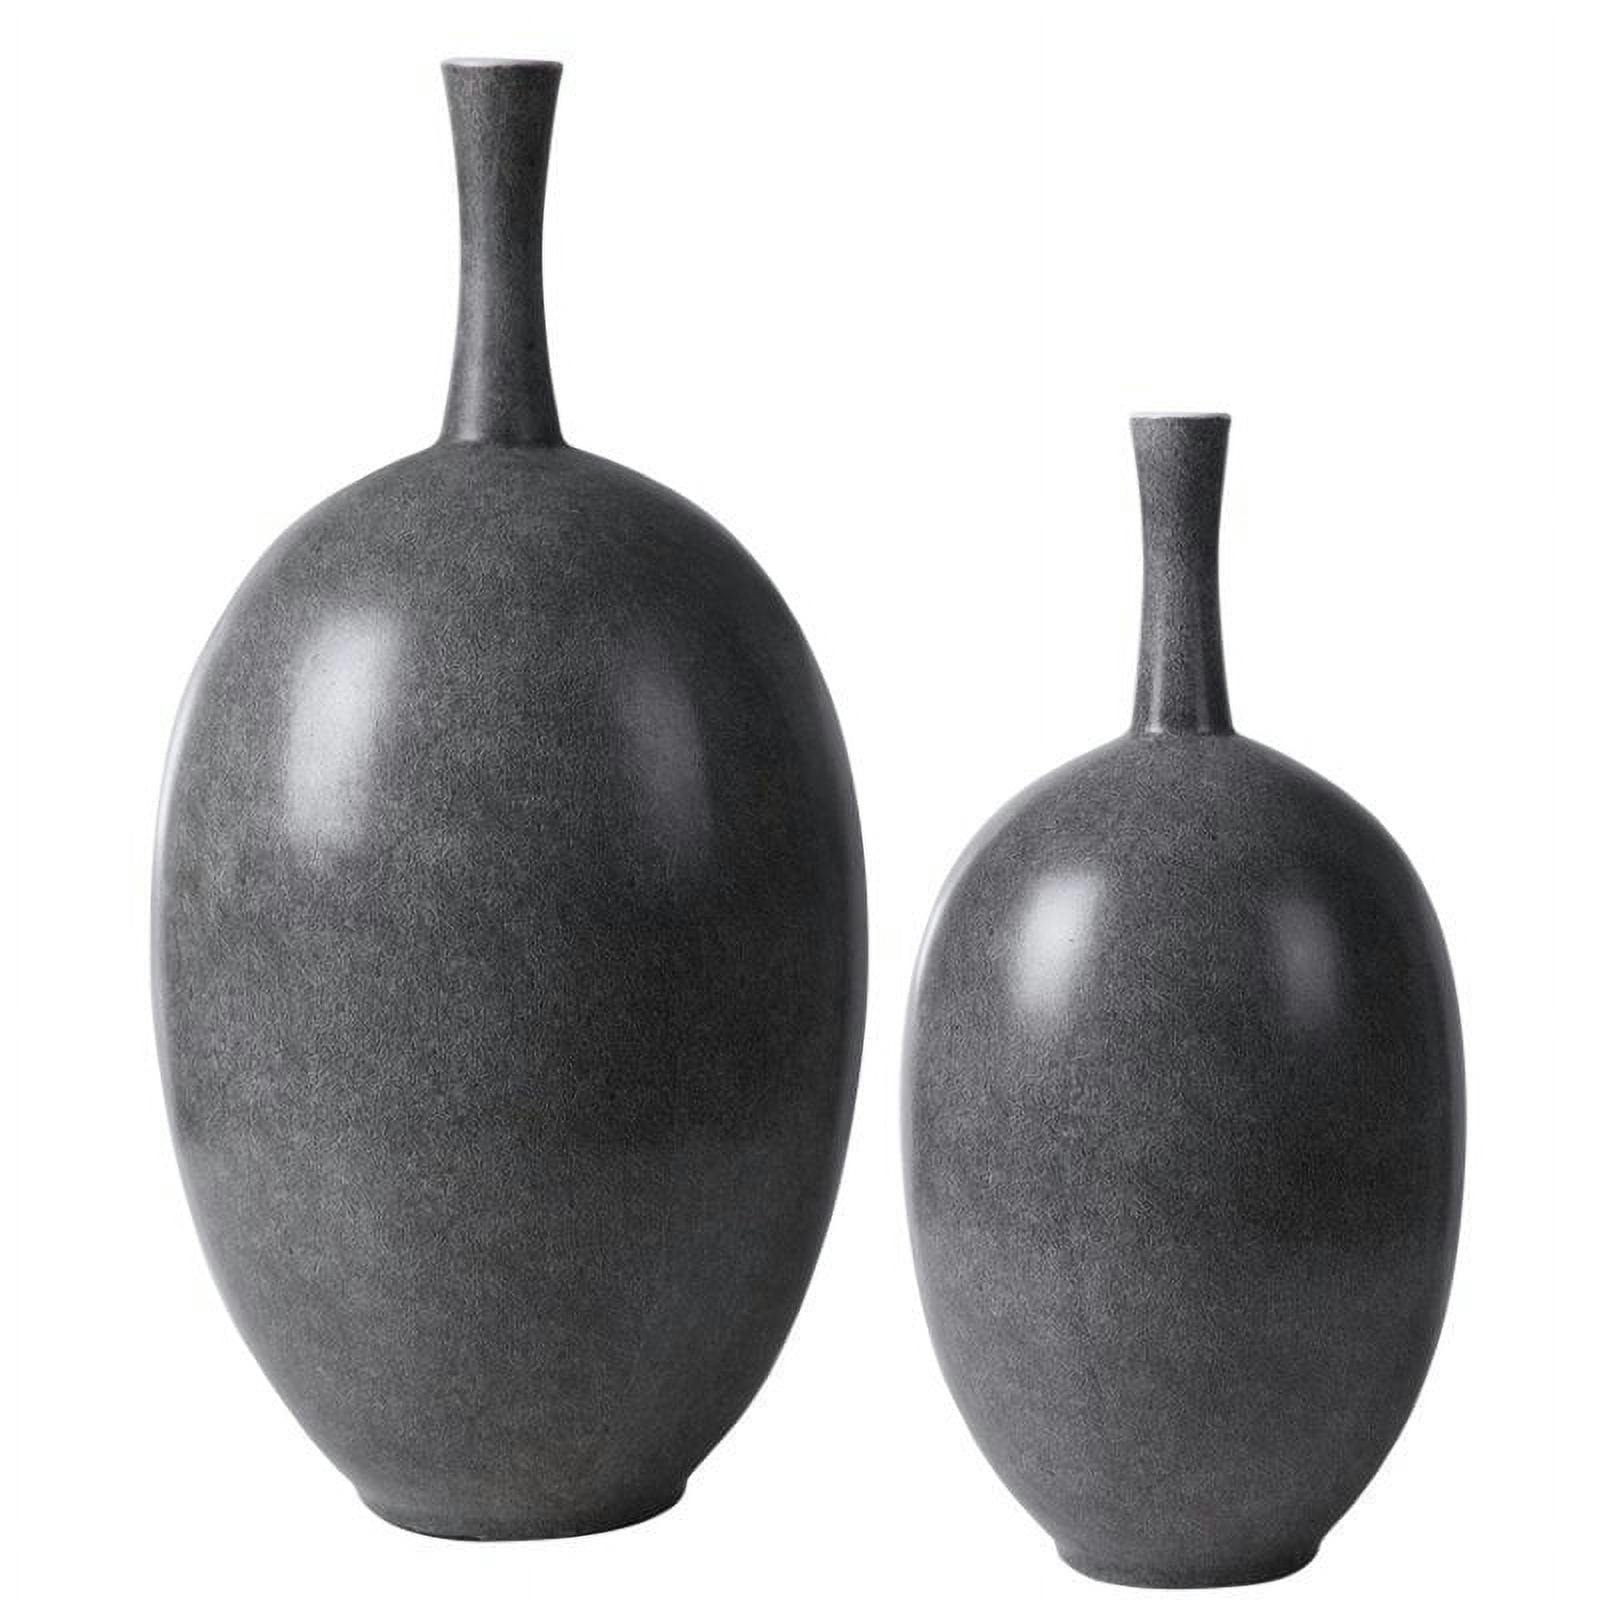 Marbled Black and White Ceramic Vase Duo